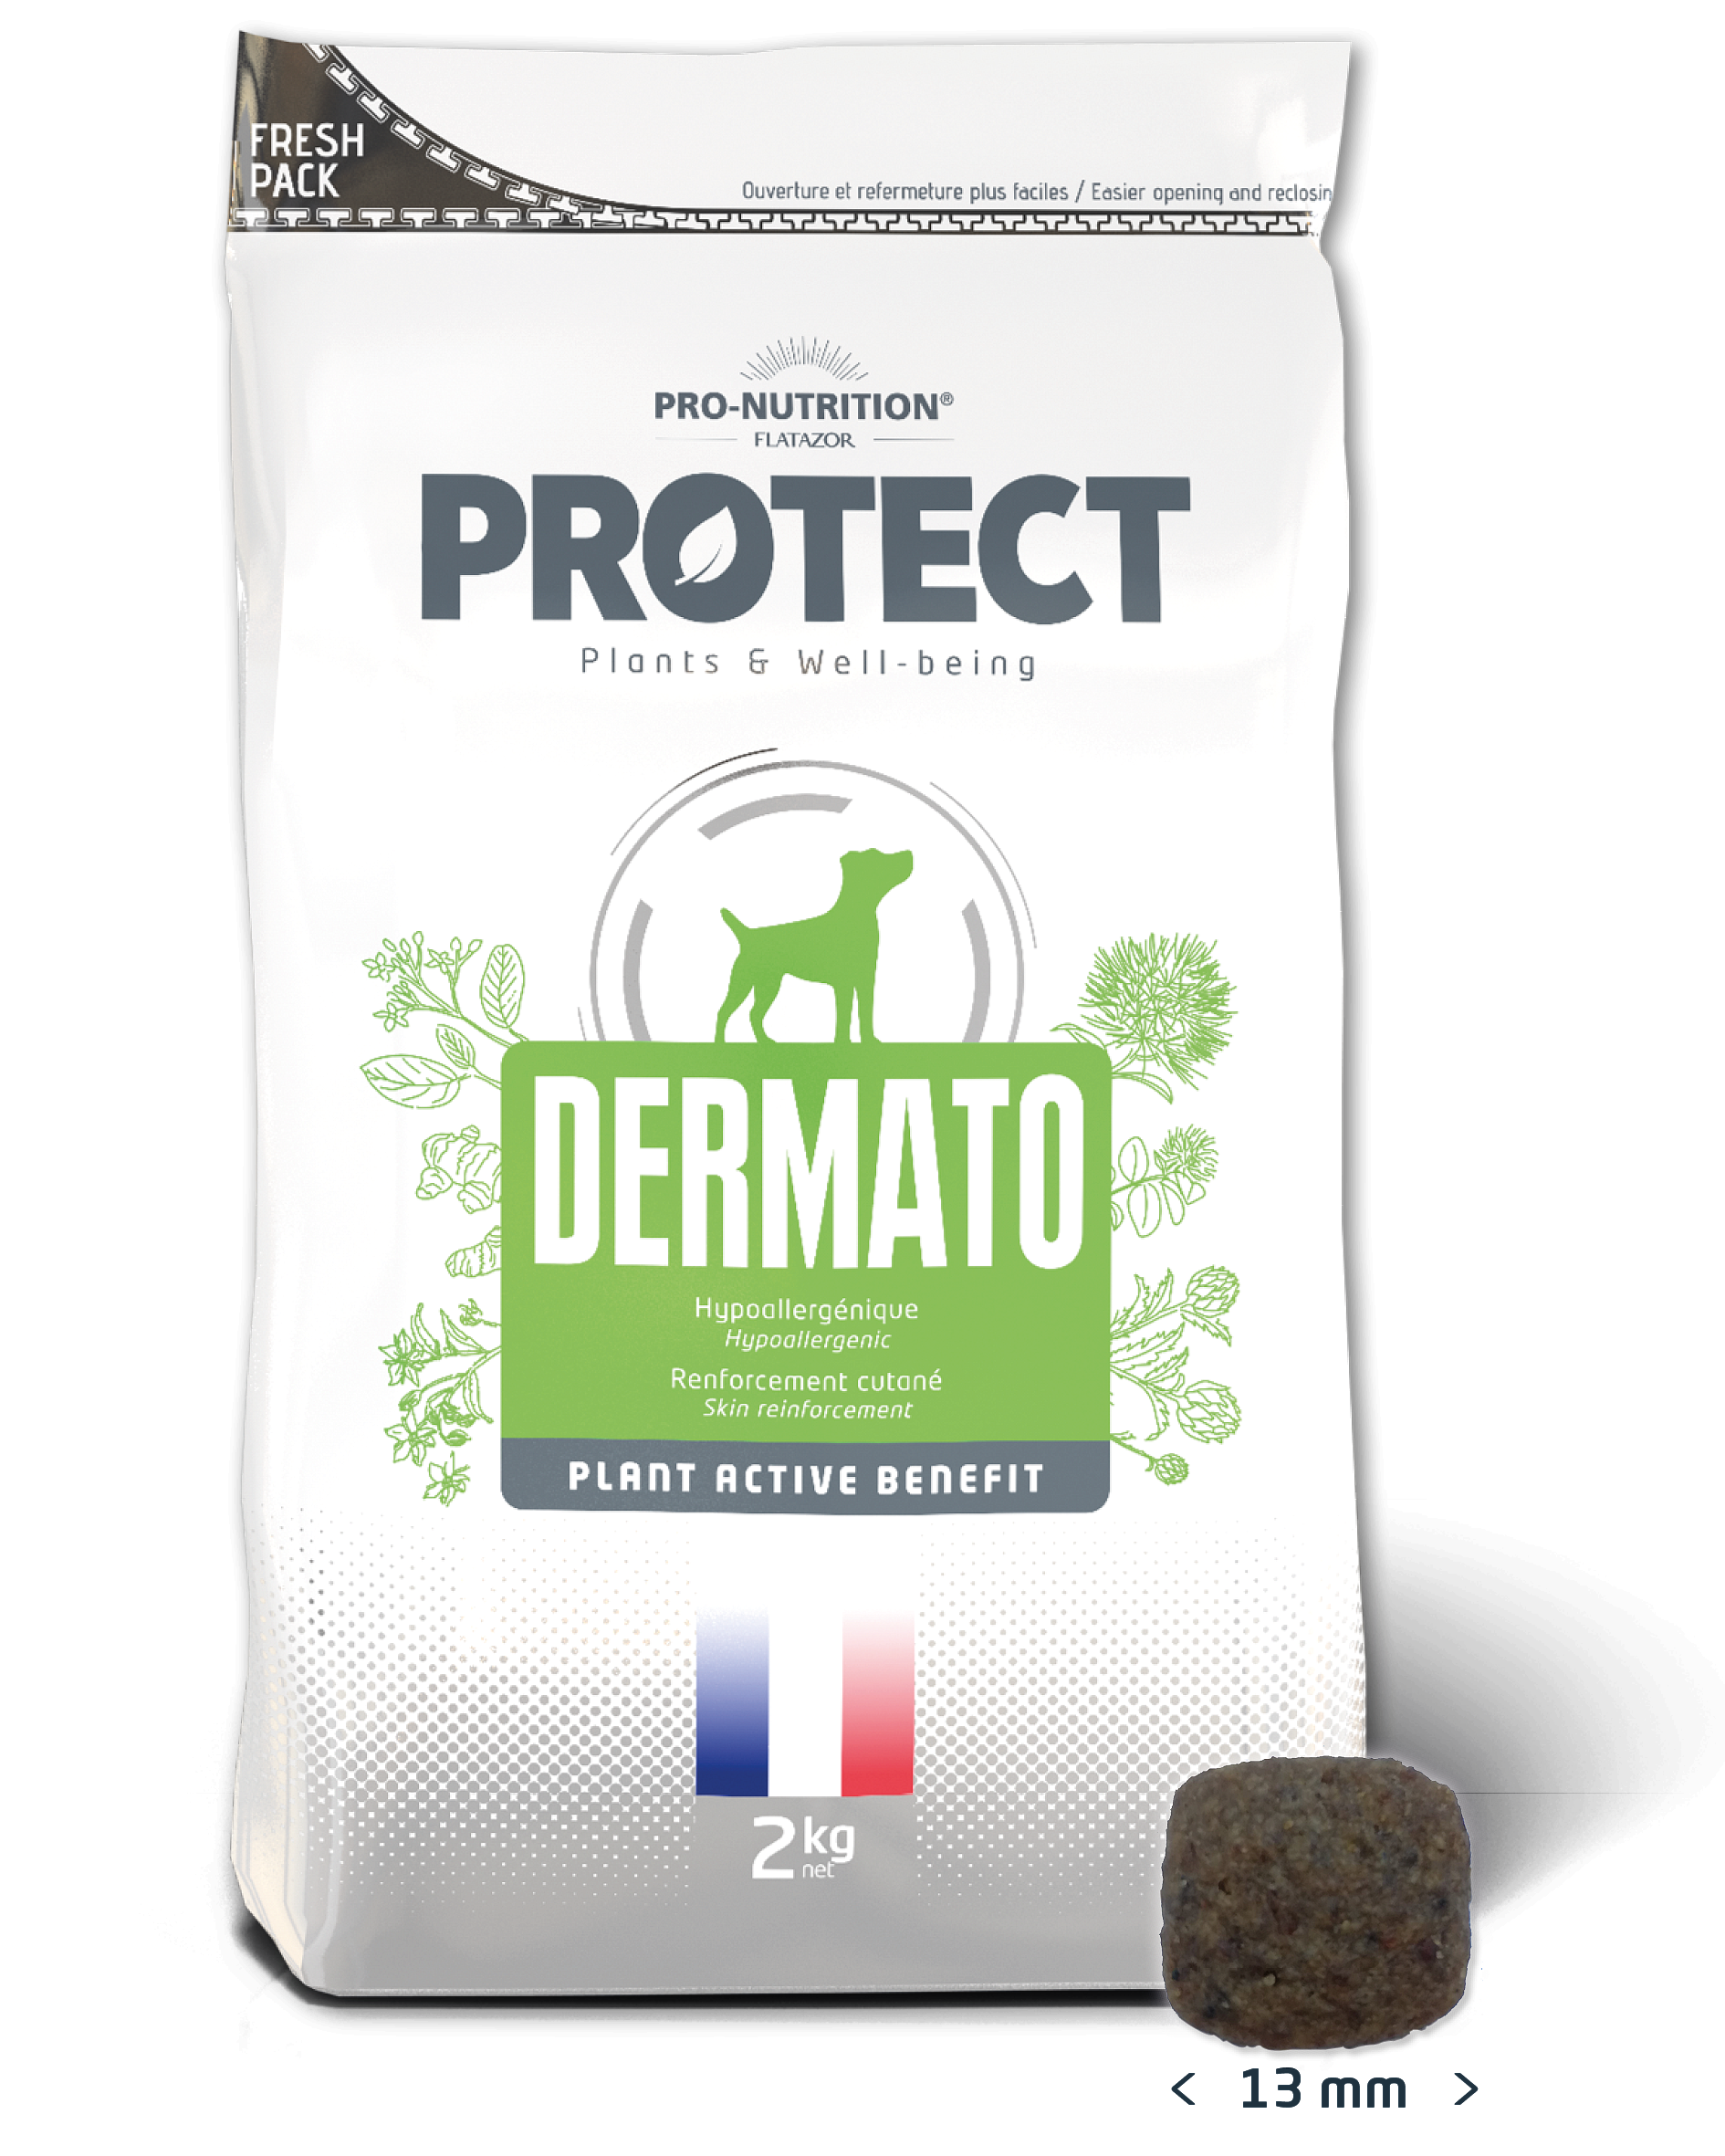 Сухой корм Для собак Pro-Nutrition Flatazor Protect Dermato